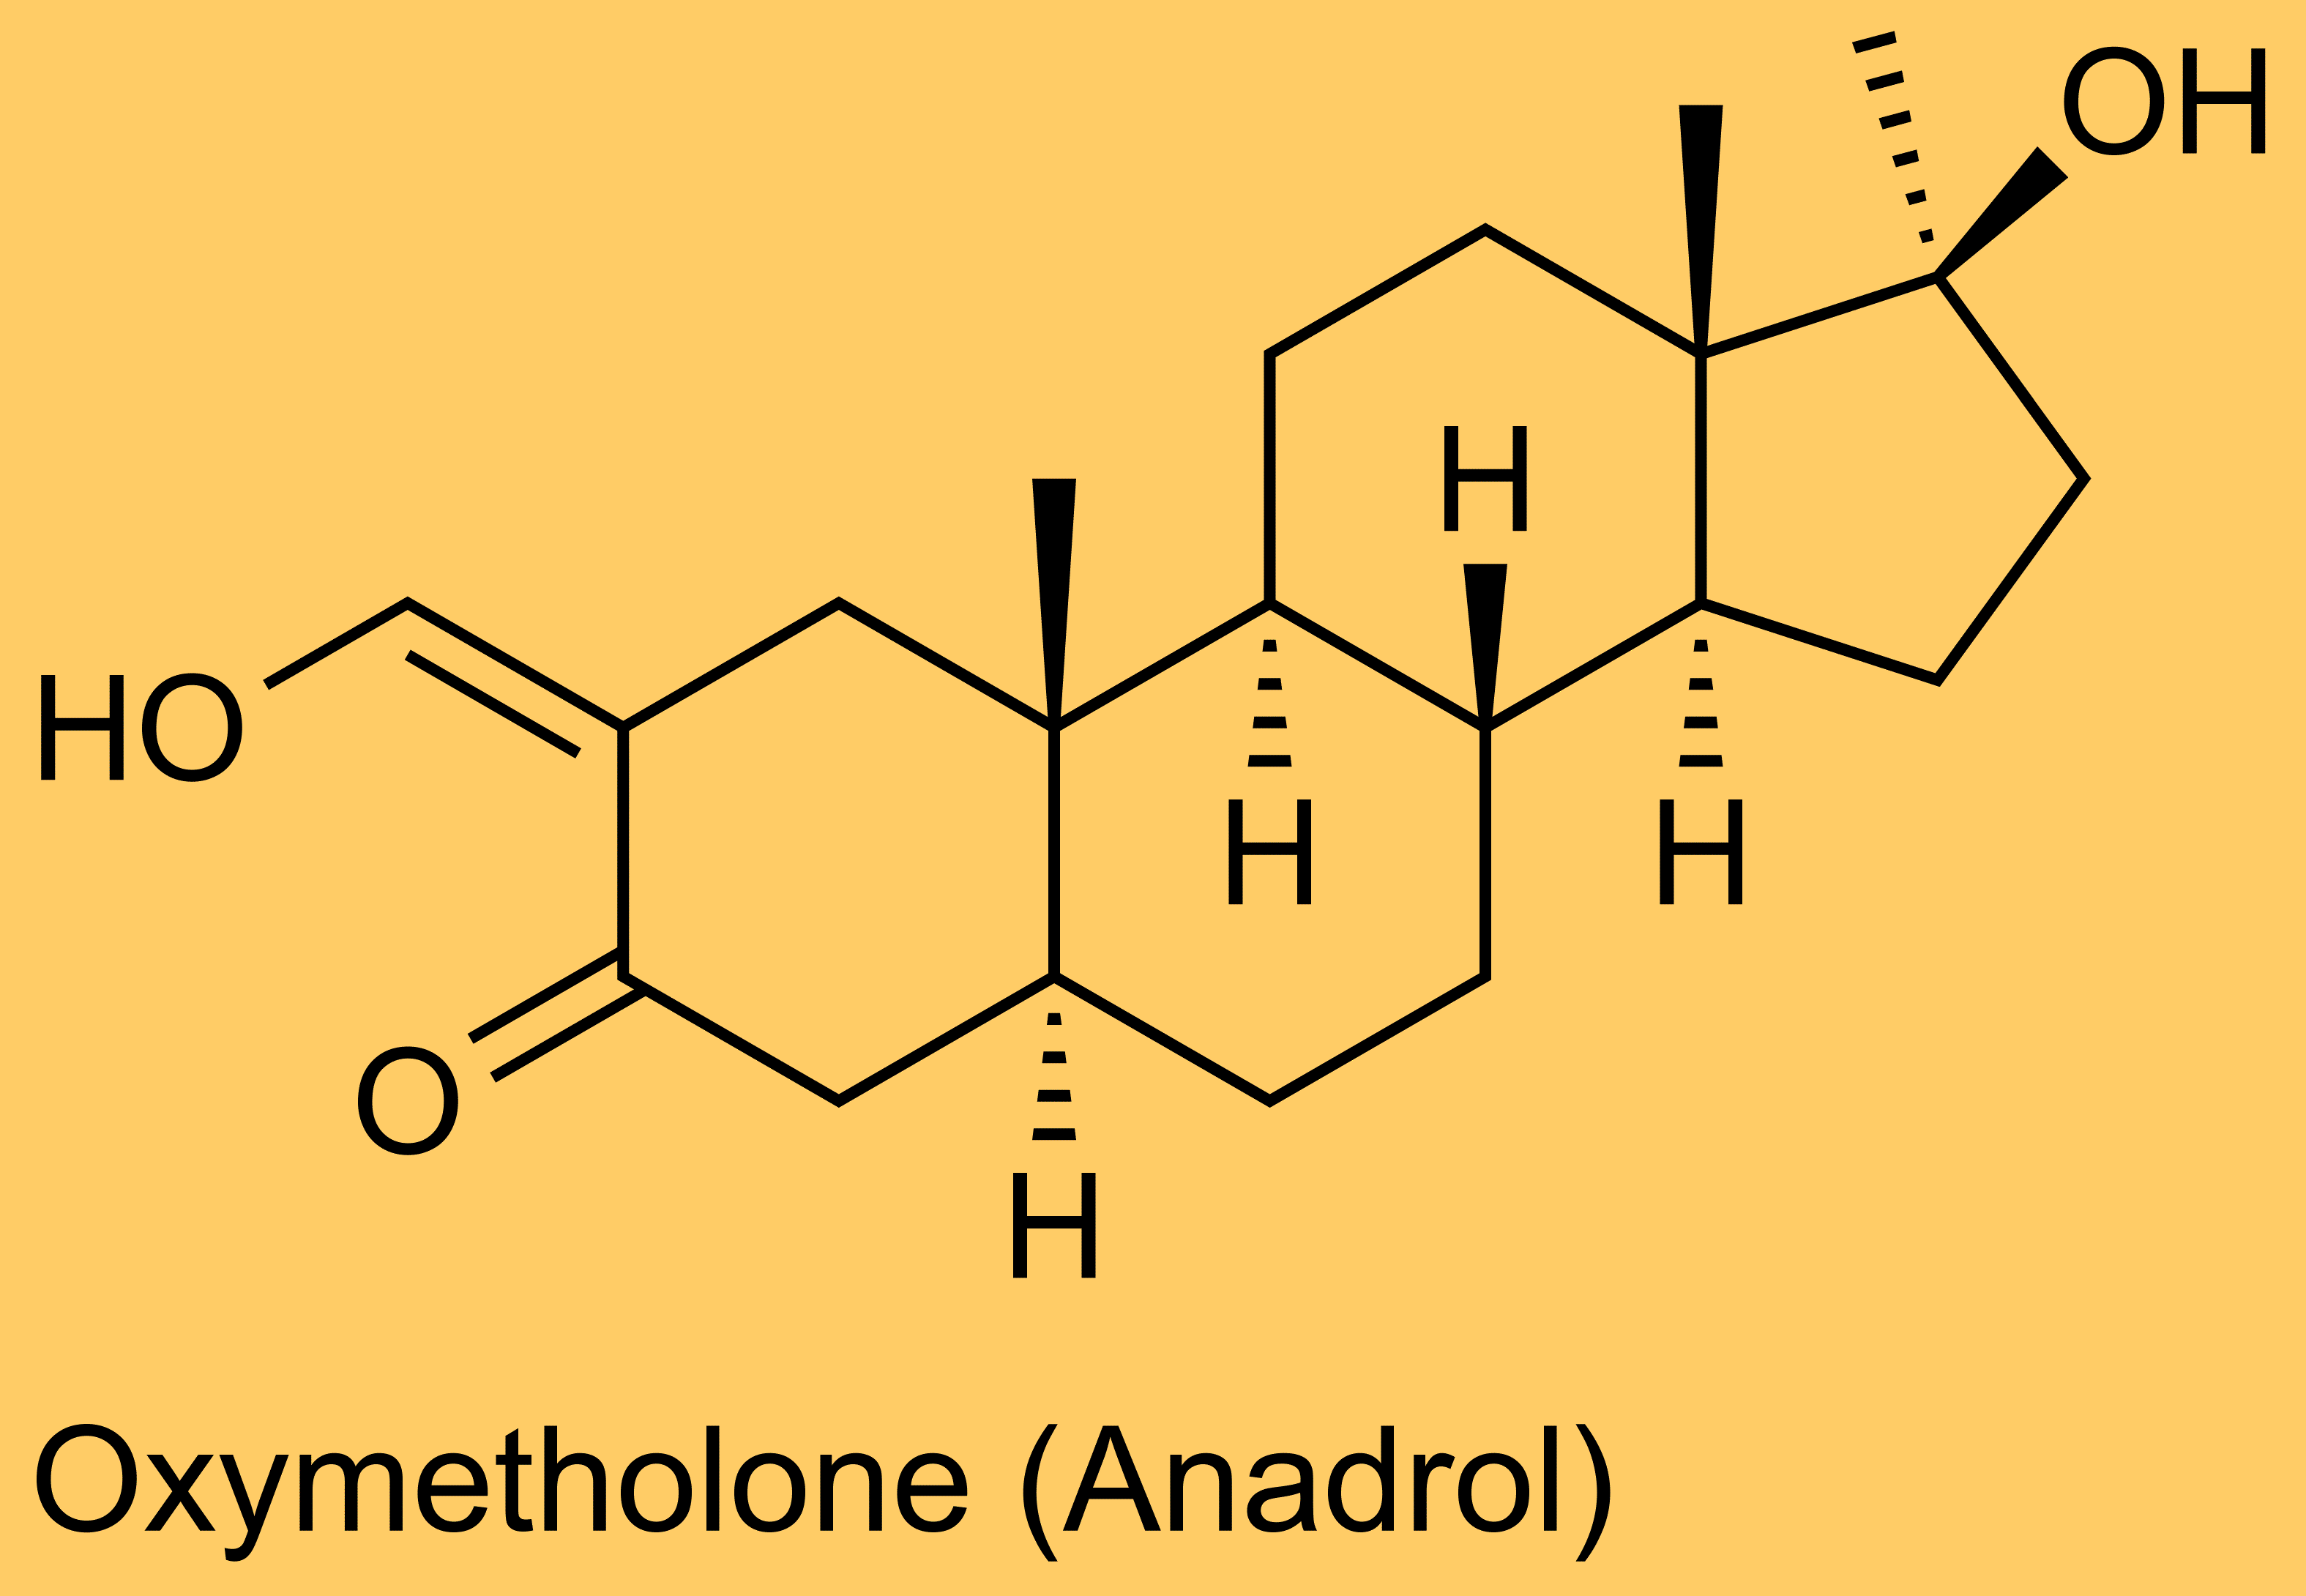 anadrol (oxymetholone)